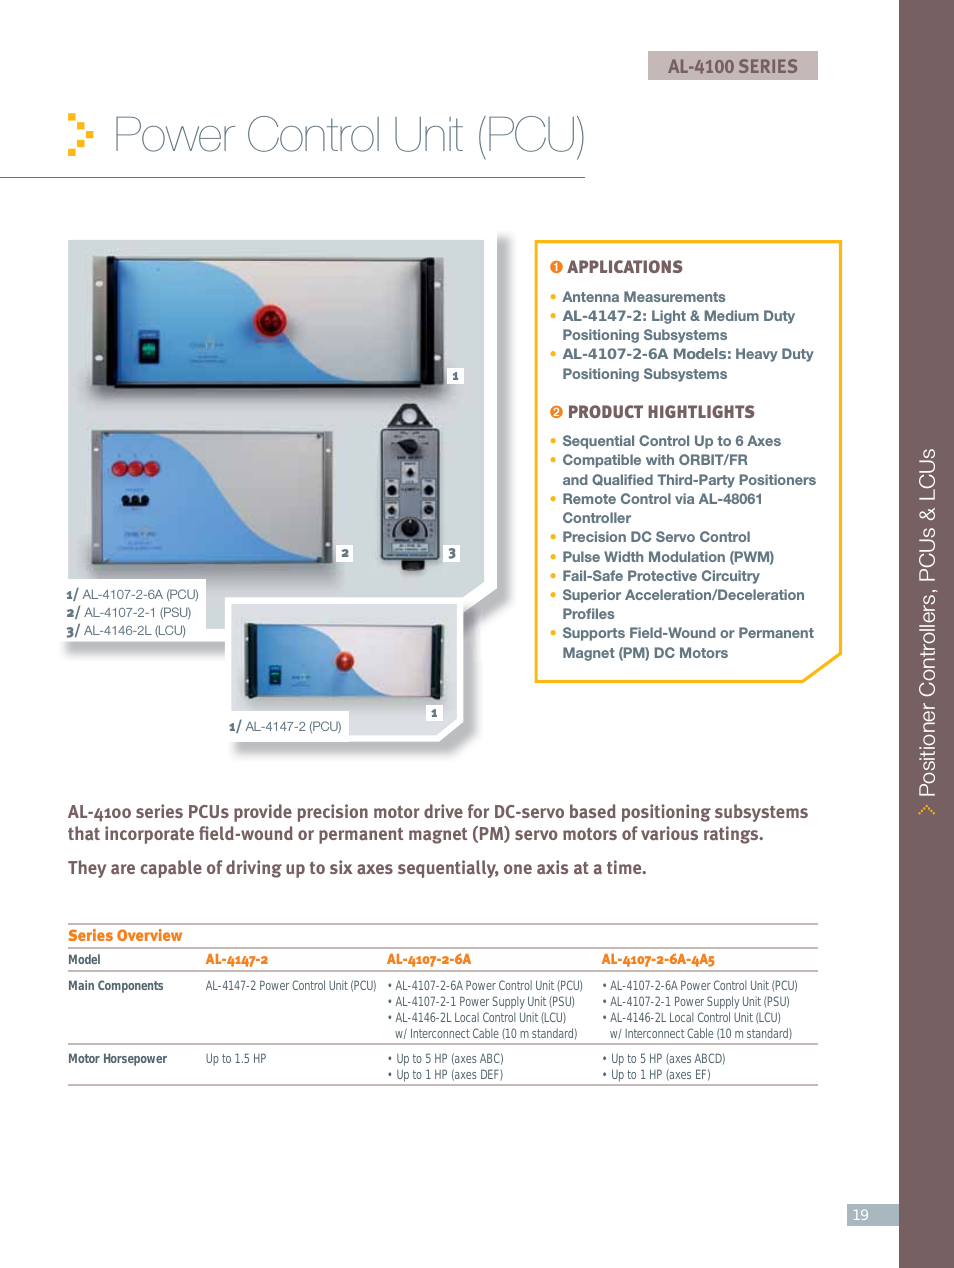 Power Control Units (PCUs): AL-4147-2